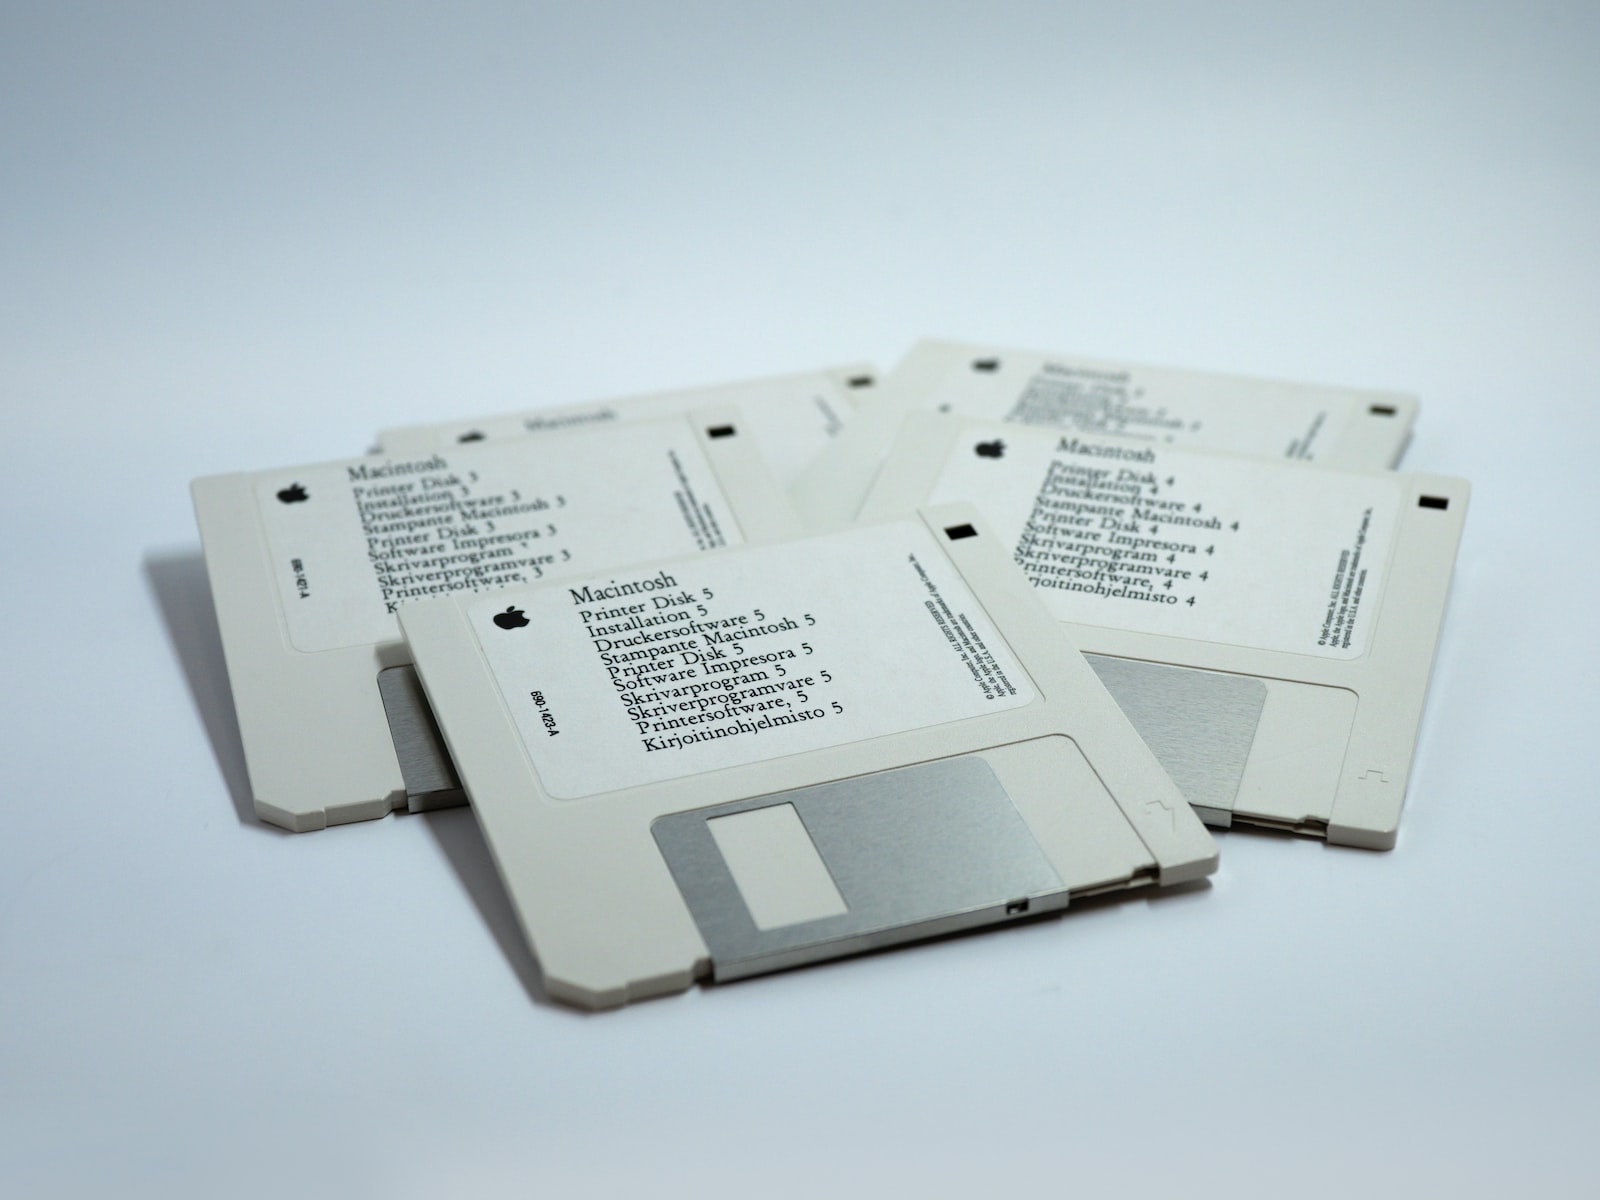 four MacBook diskettes